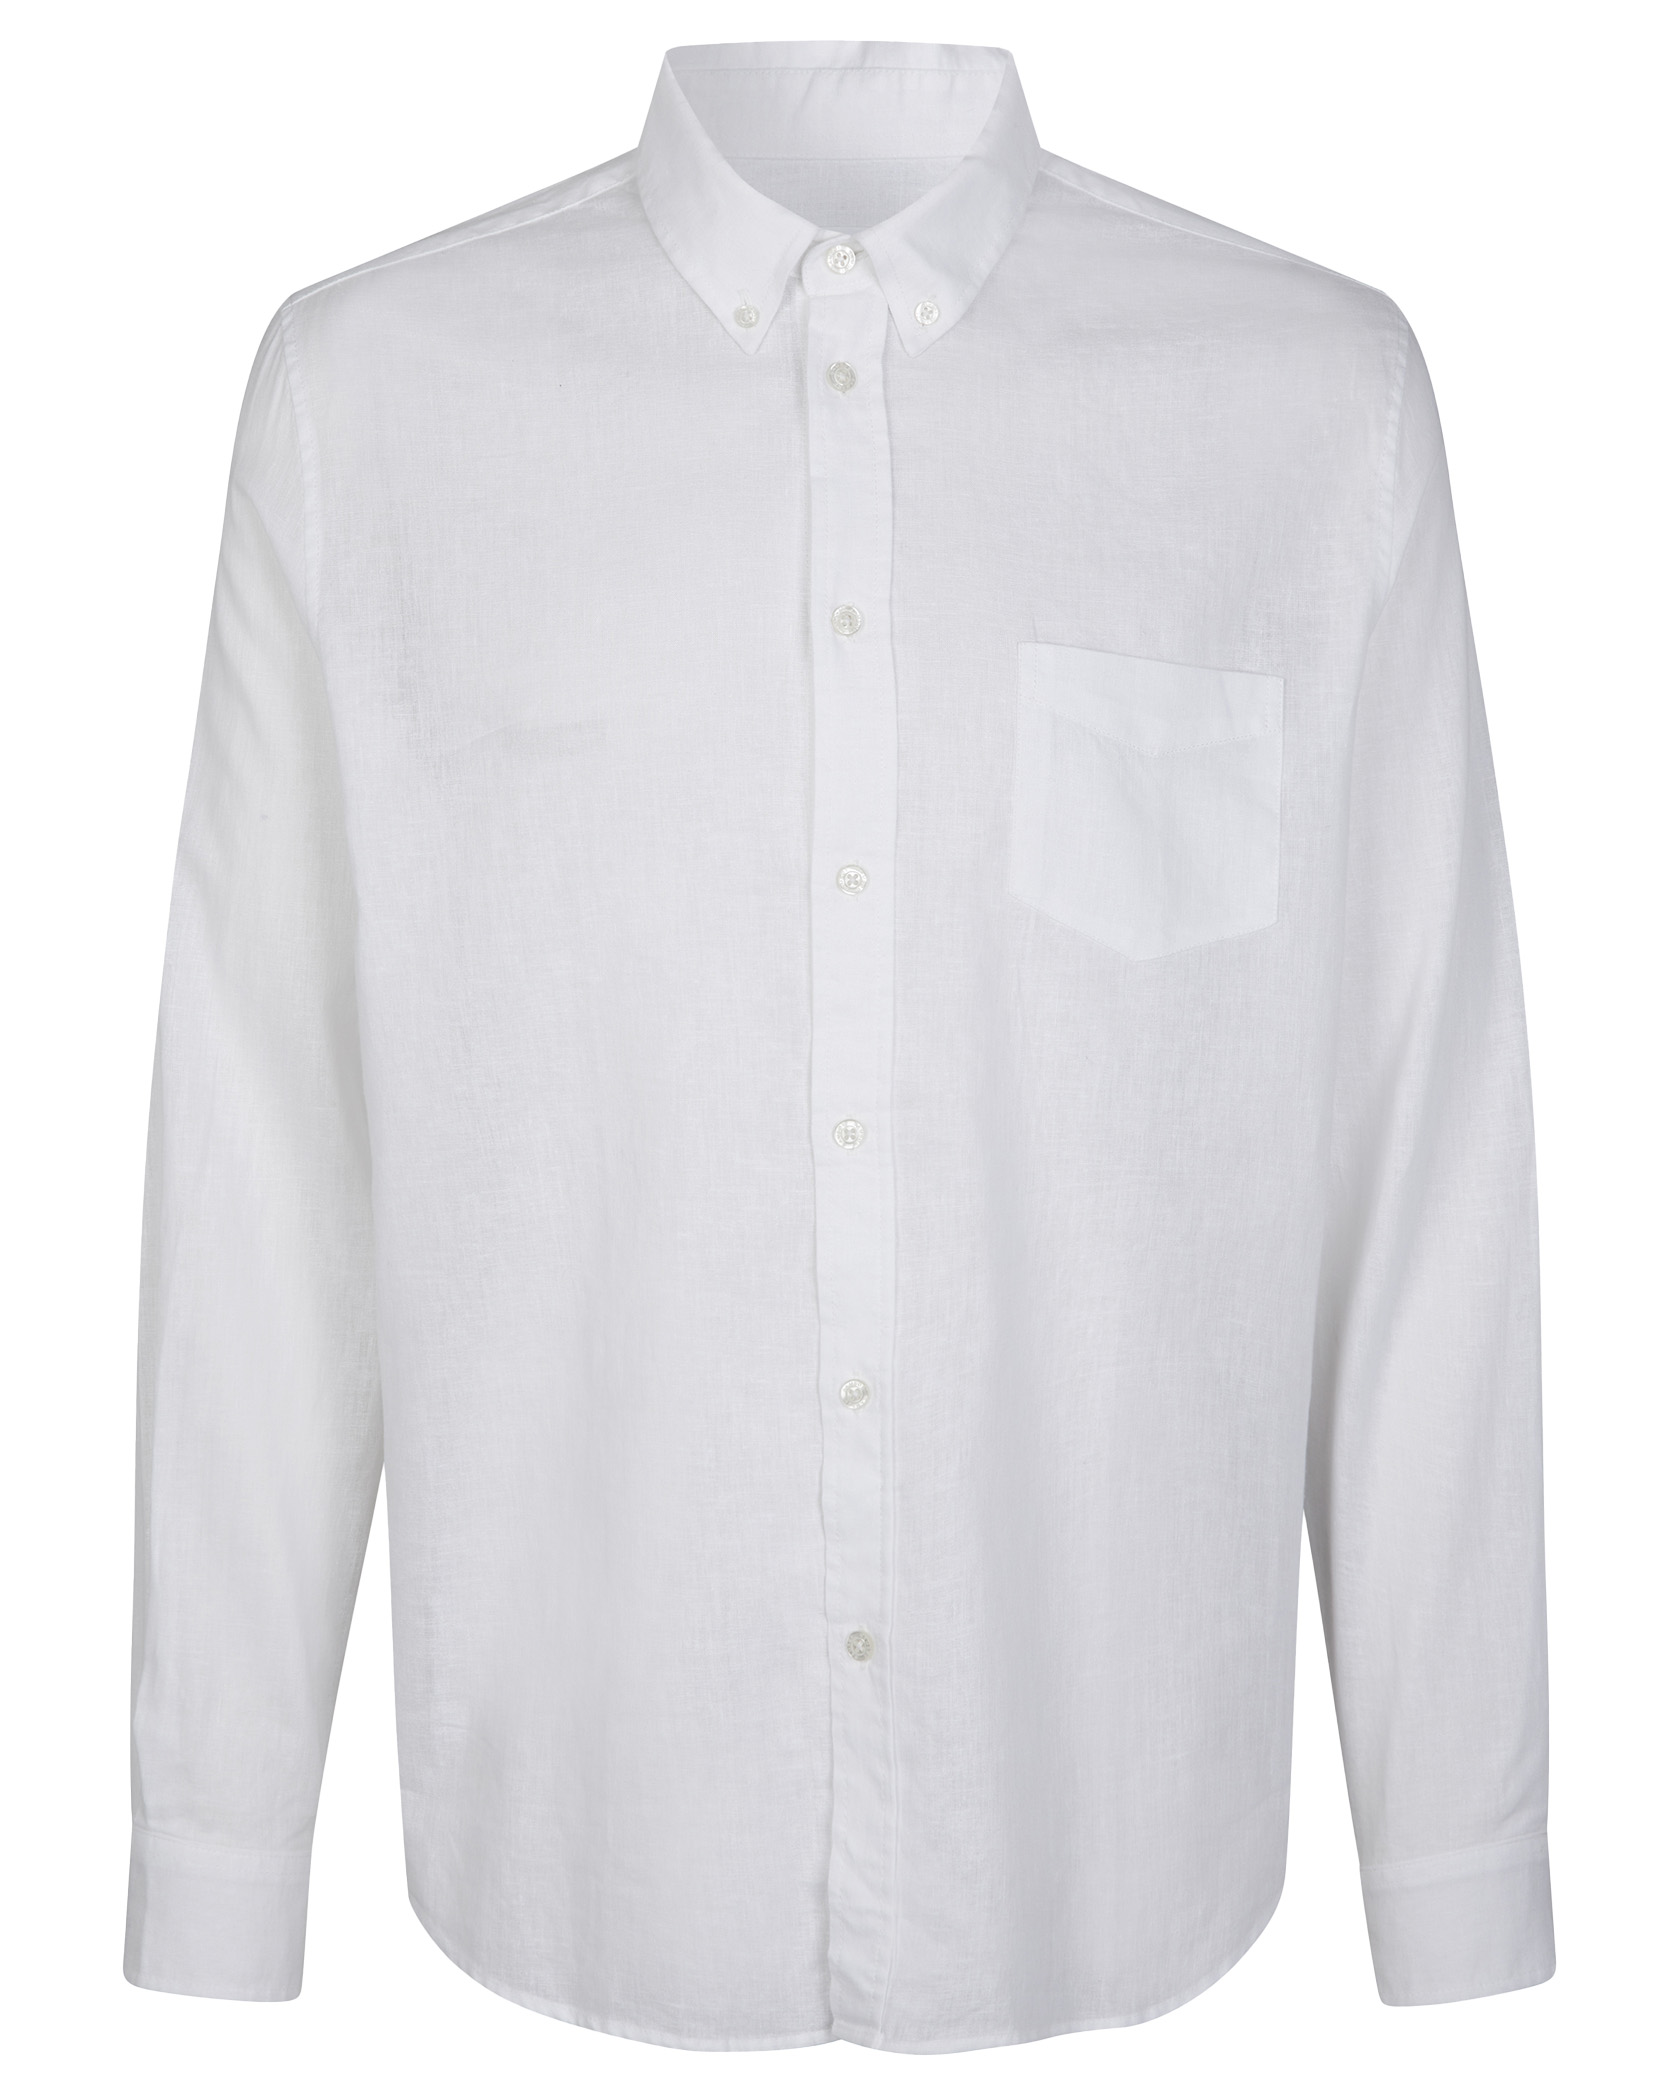 Samsøe and Samsøe Liam BA Shirt 6971 M White (Storlek L)